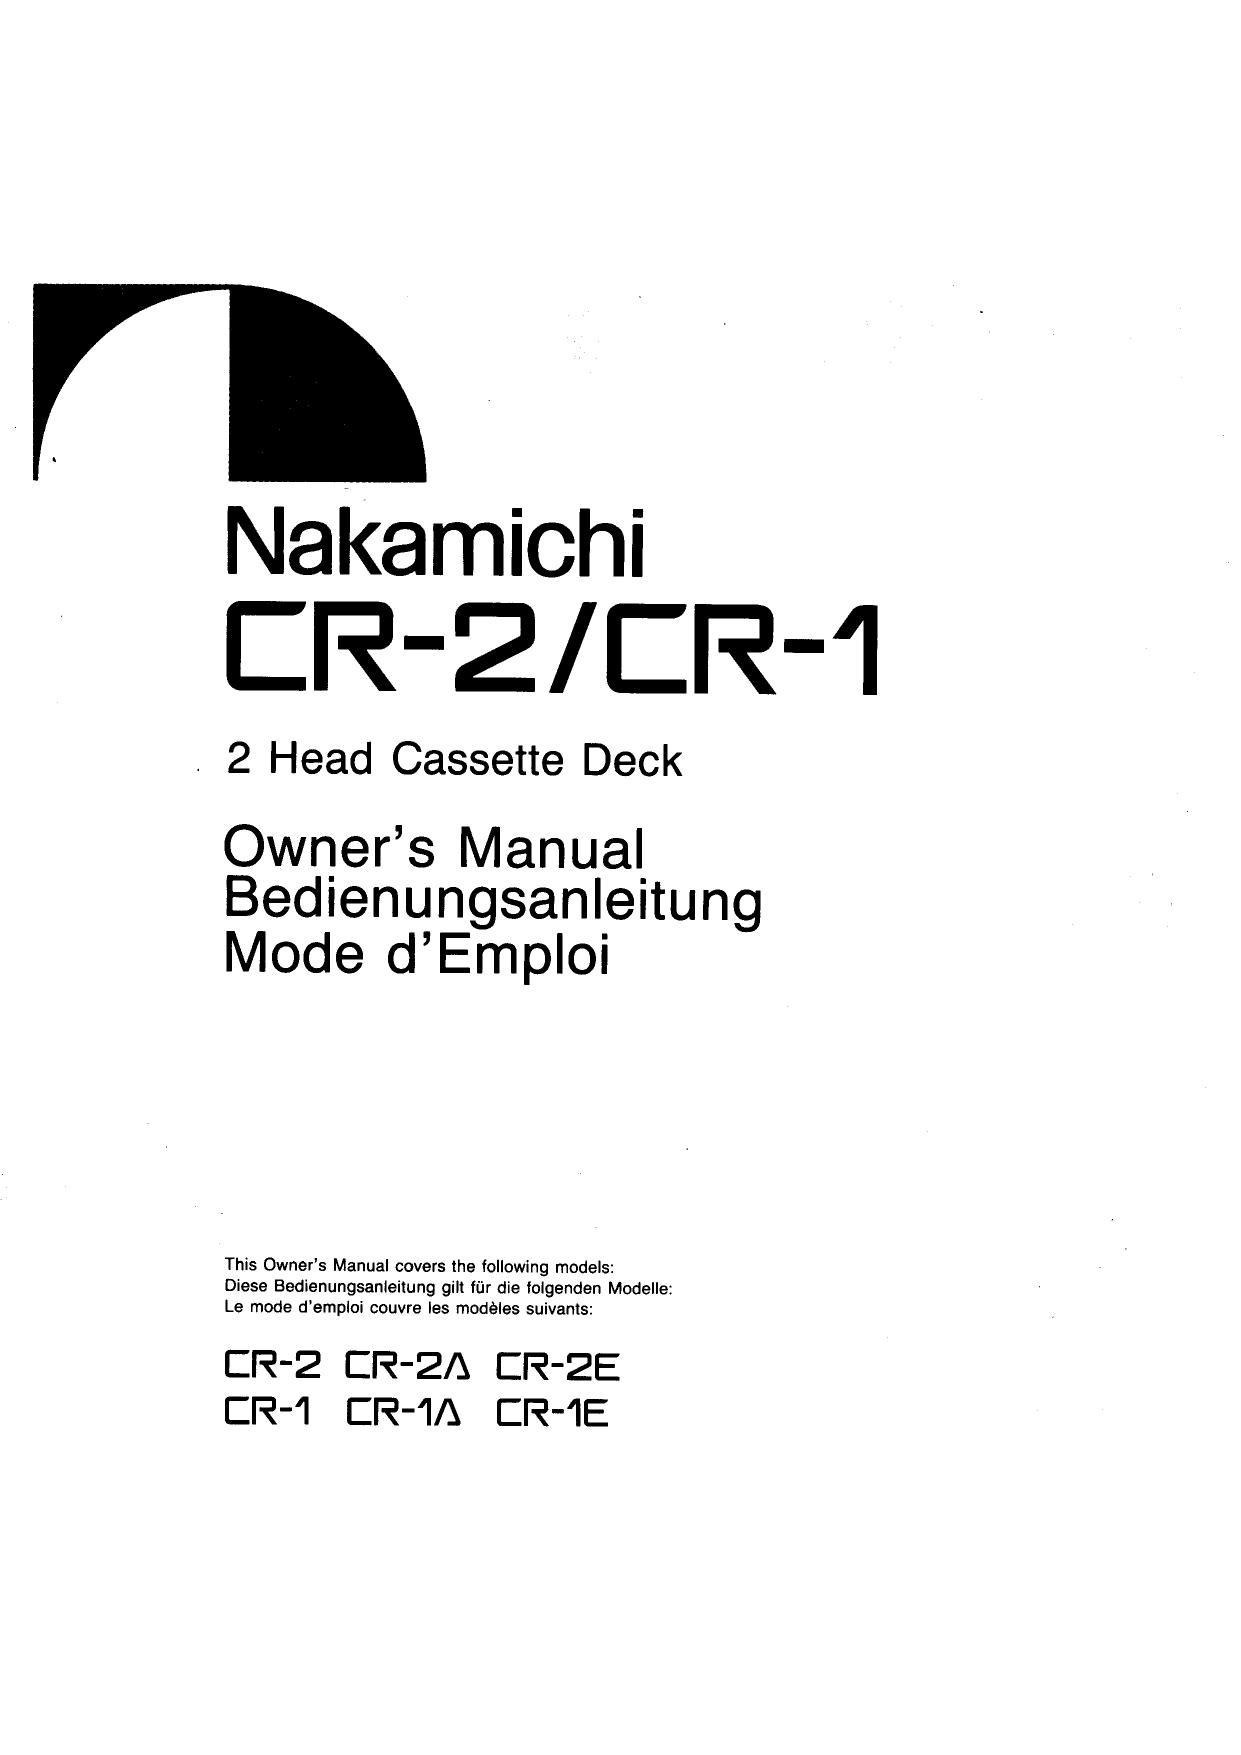 Nakamichi CR 2 E Owners Manual